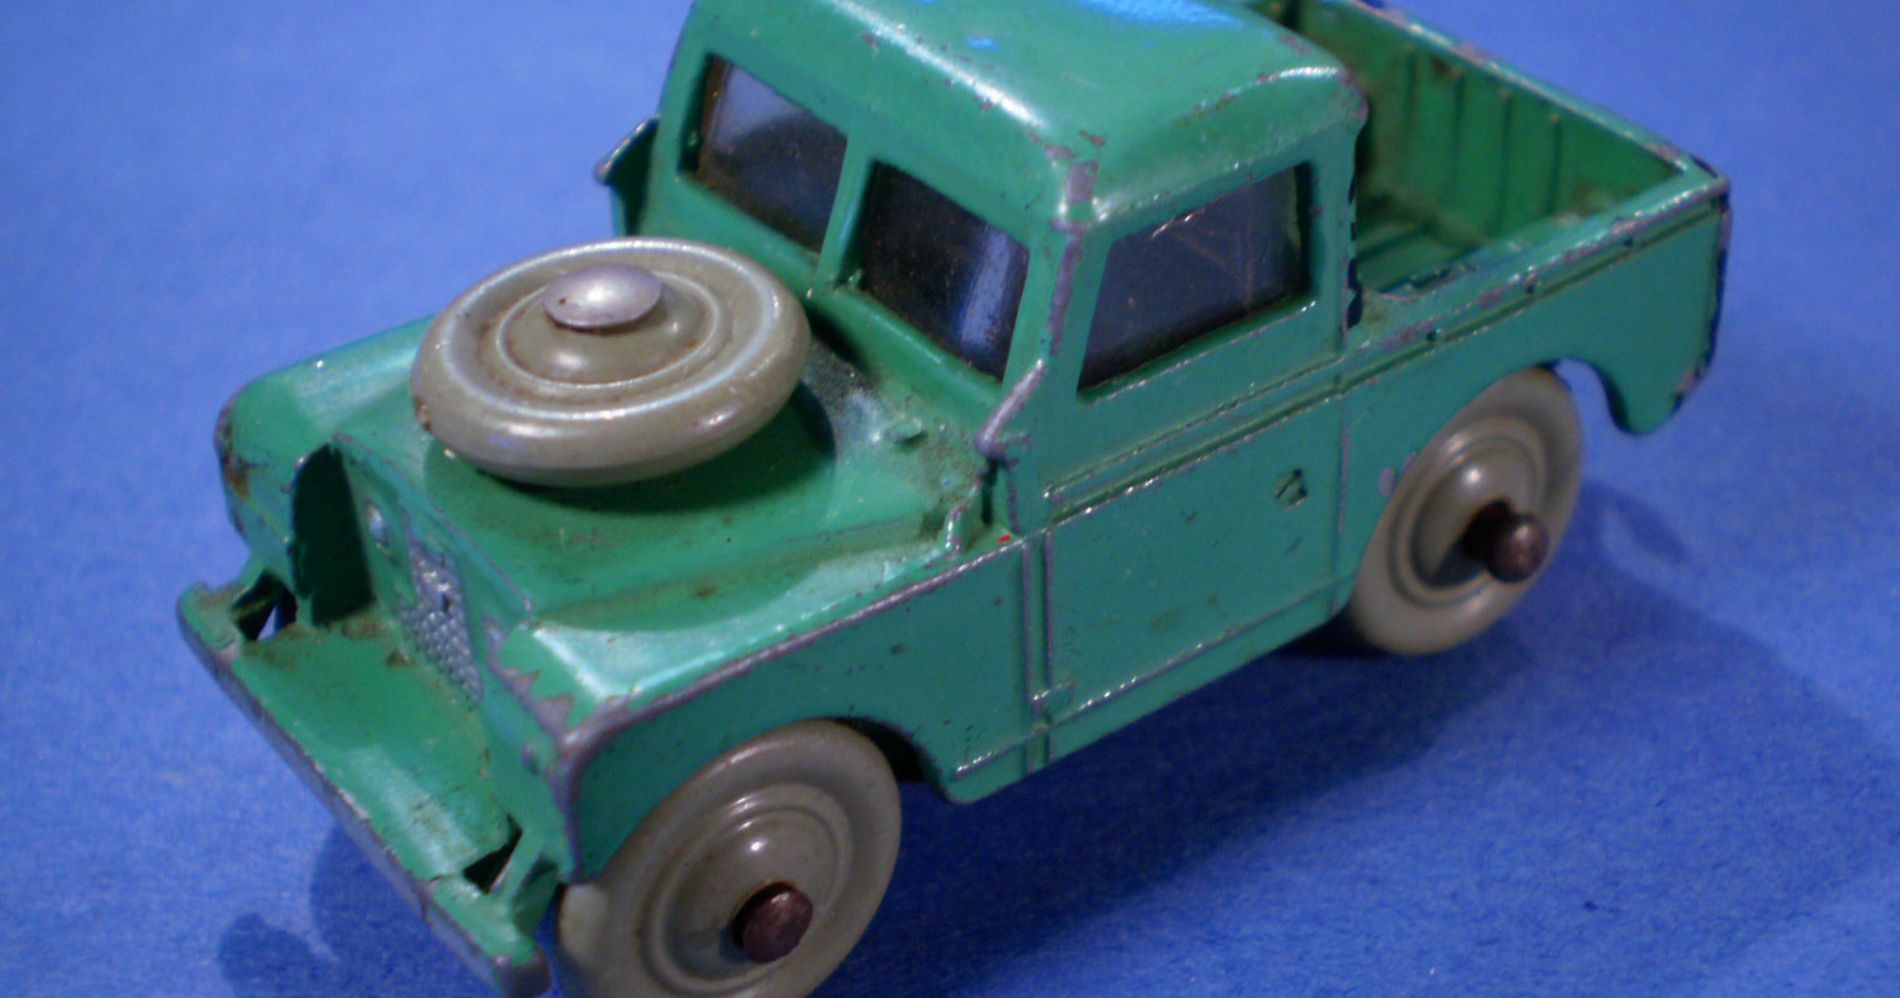 Salah Satu Model Diecast Toy Buatan Dinky Toys - Image: Wikimedia